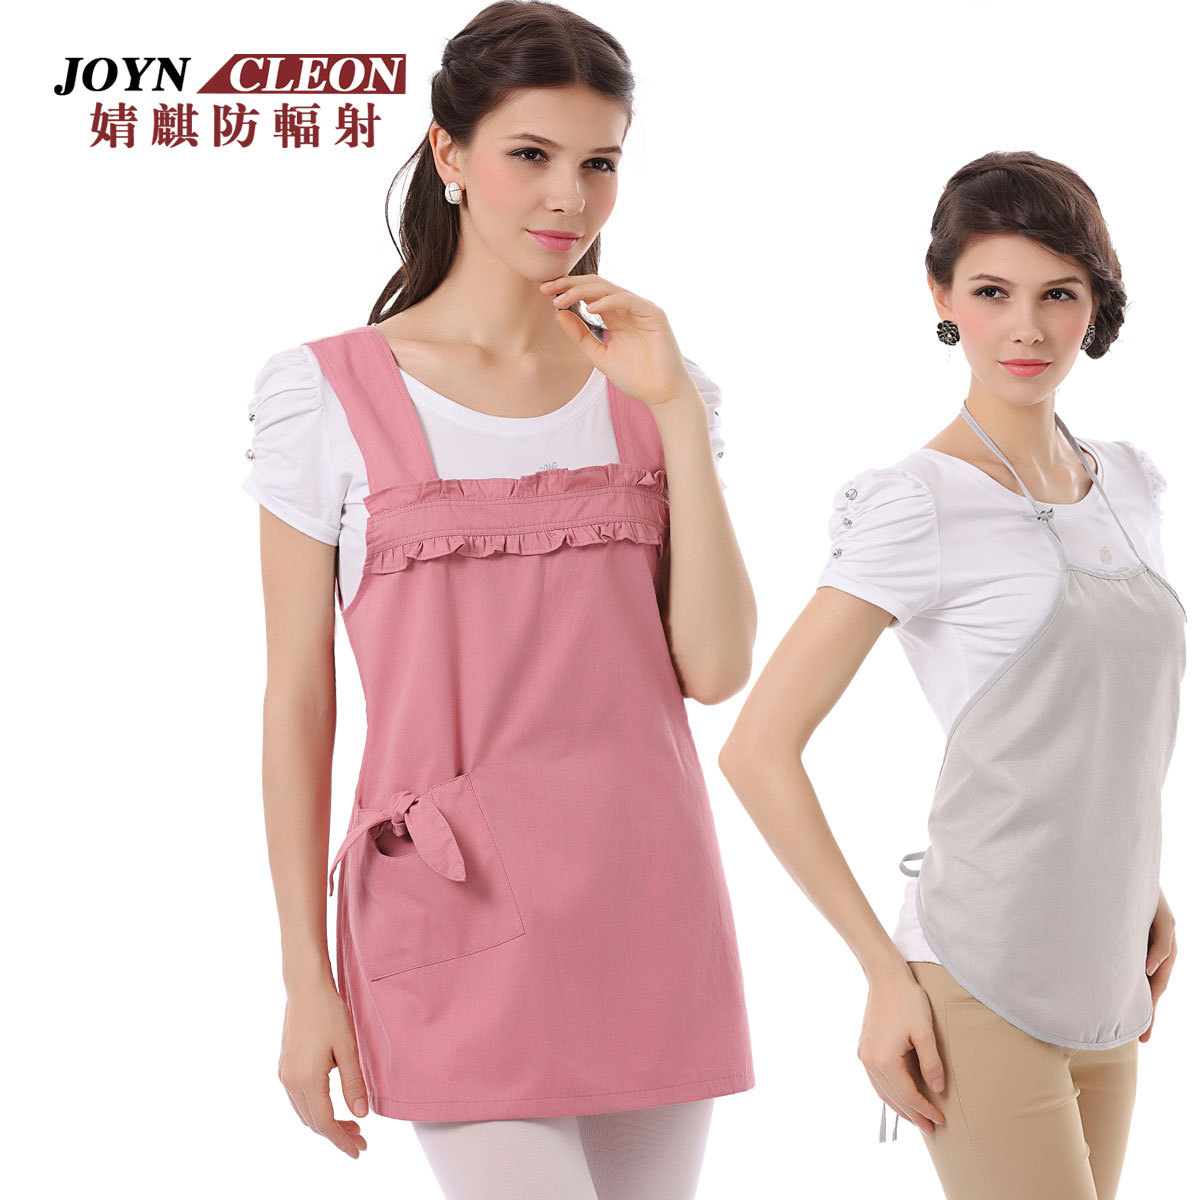 Joyncleon qi radiation-resistant maternity clothing silver fiber radiation-resistant bellyached maternity clothing